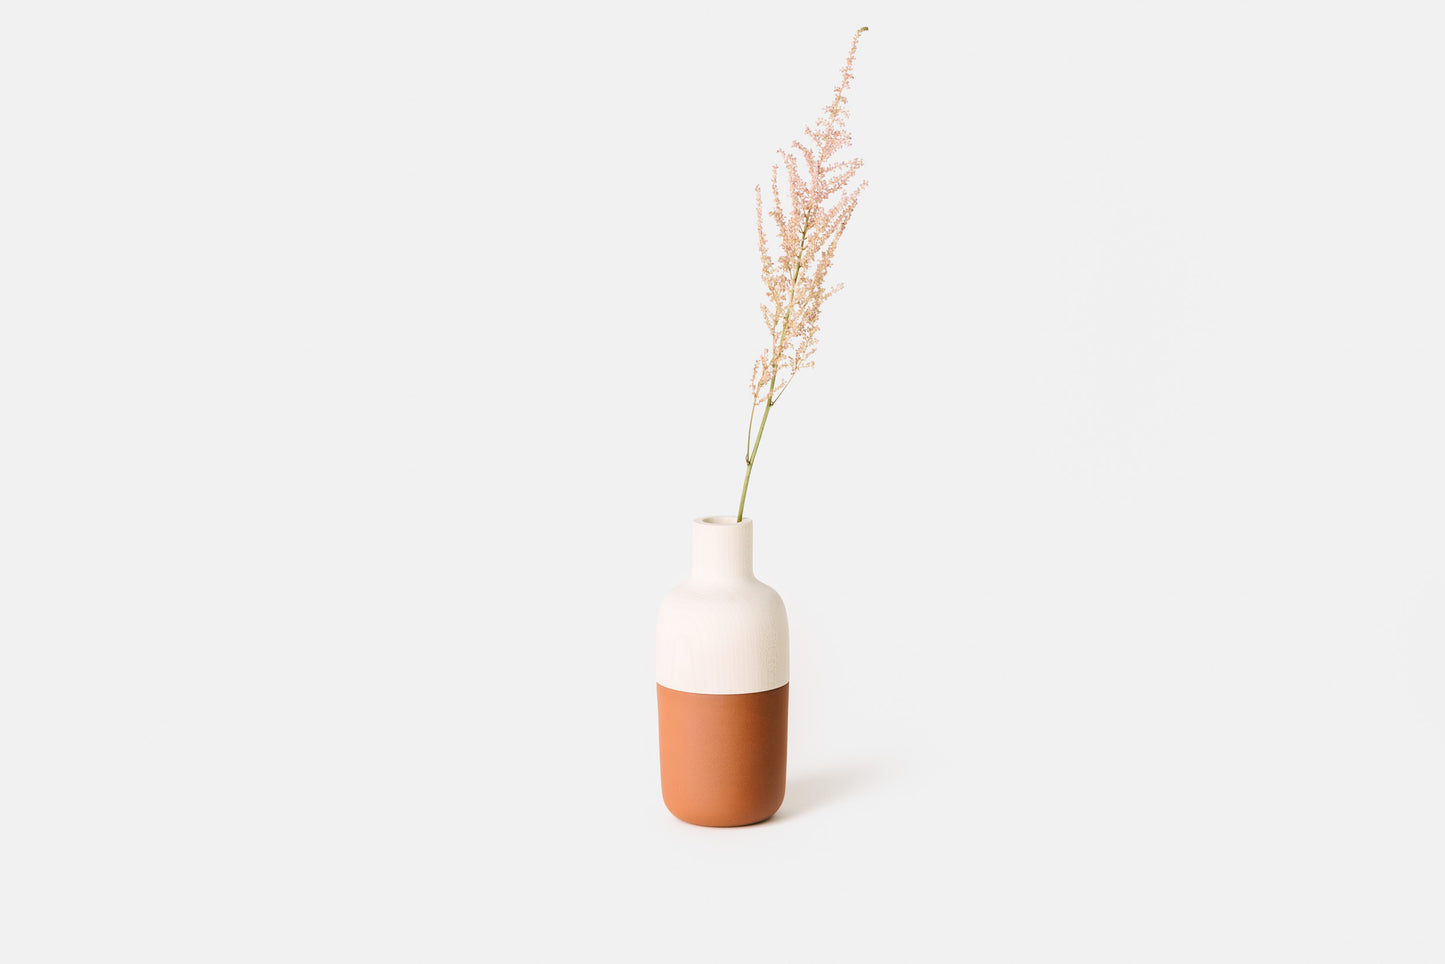 Bleached Maple and terracotta marais vase by Melanie Abrantes Designs.